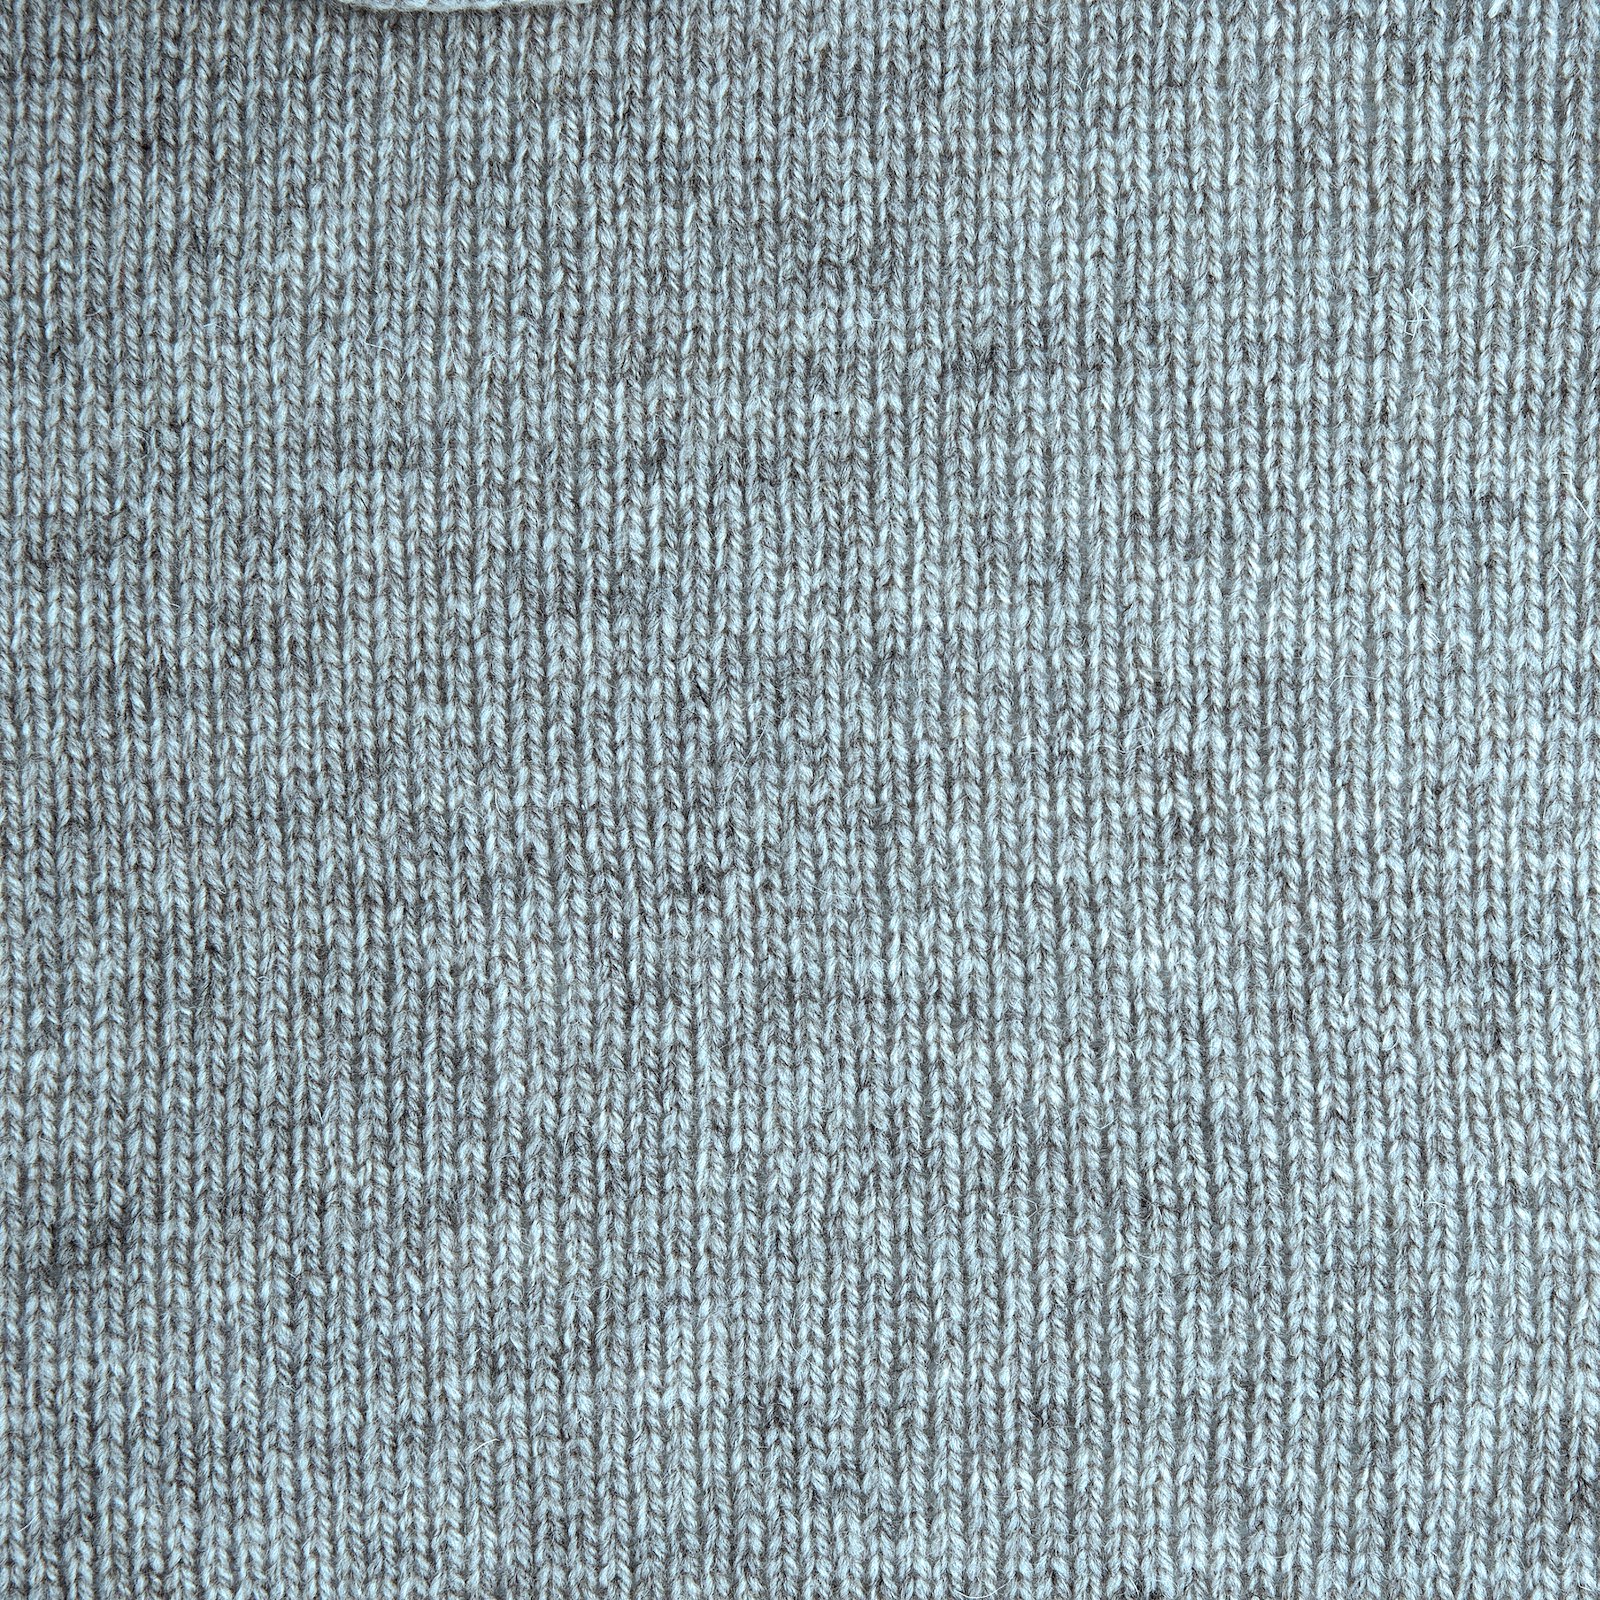 FRAYA, 100% wool yarn "Mindful", sky blue melange 90053396_sskit